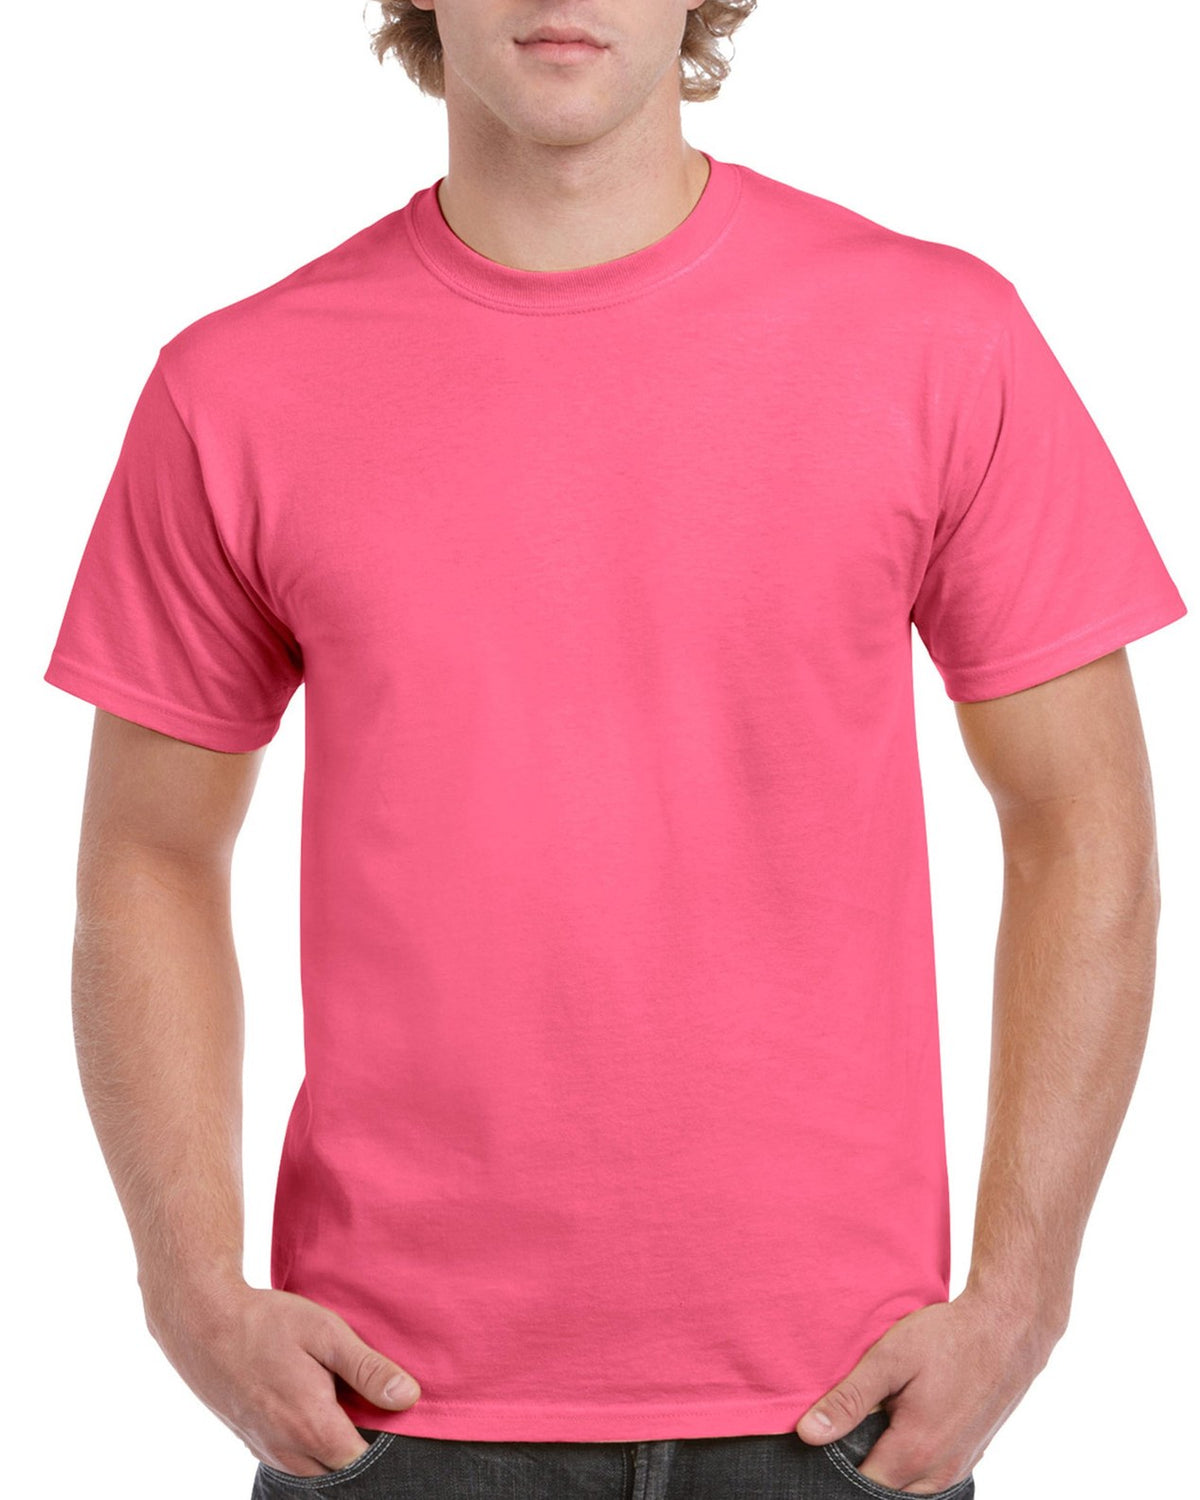 Adult 100% Cotton T-Shirt Unisex Men's Basic Plain Blank Crew Tee Tops  Shirts